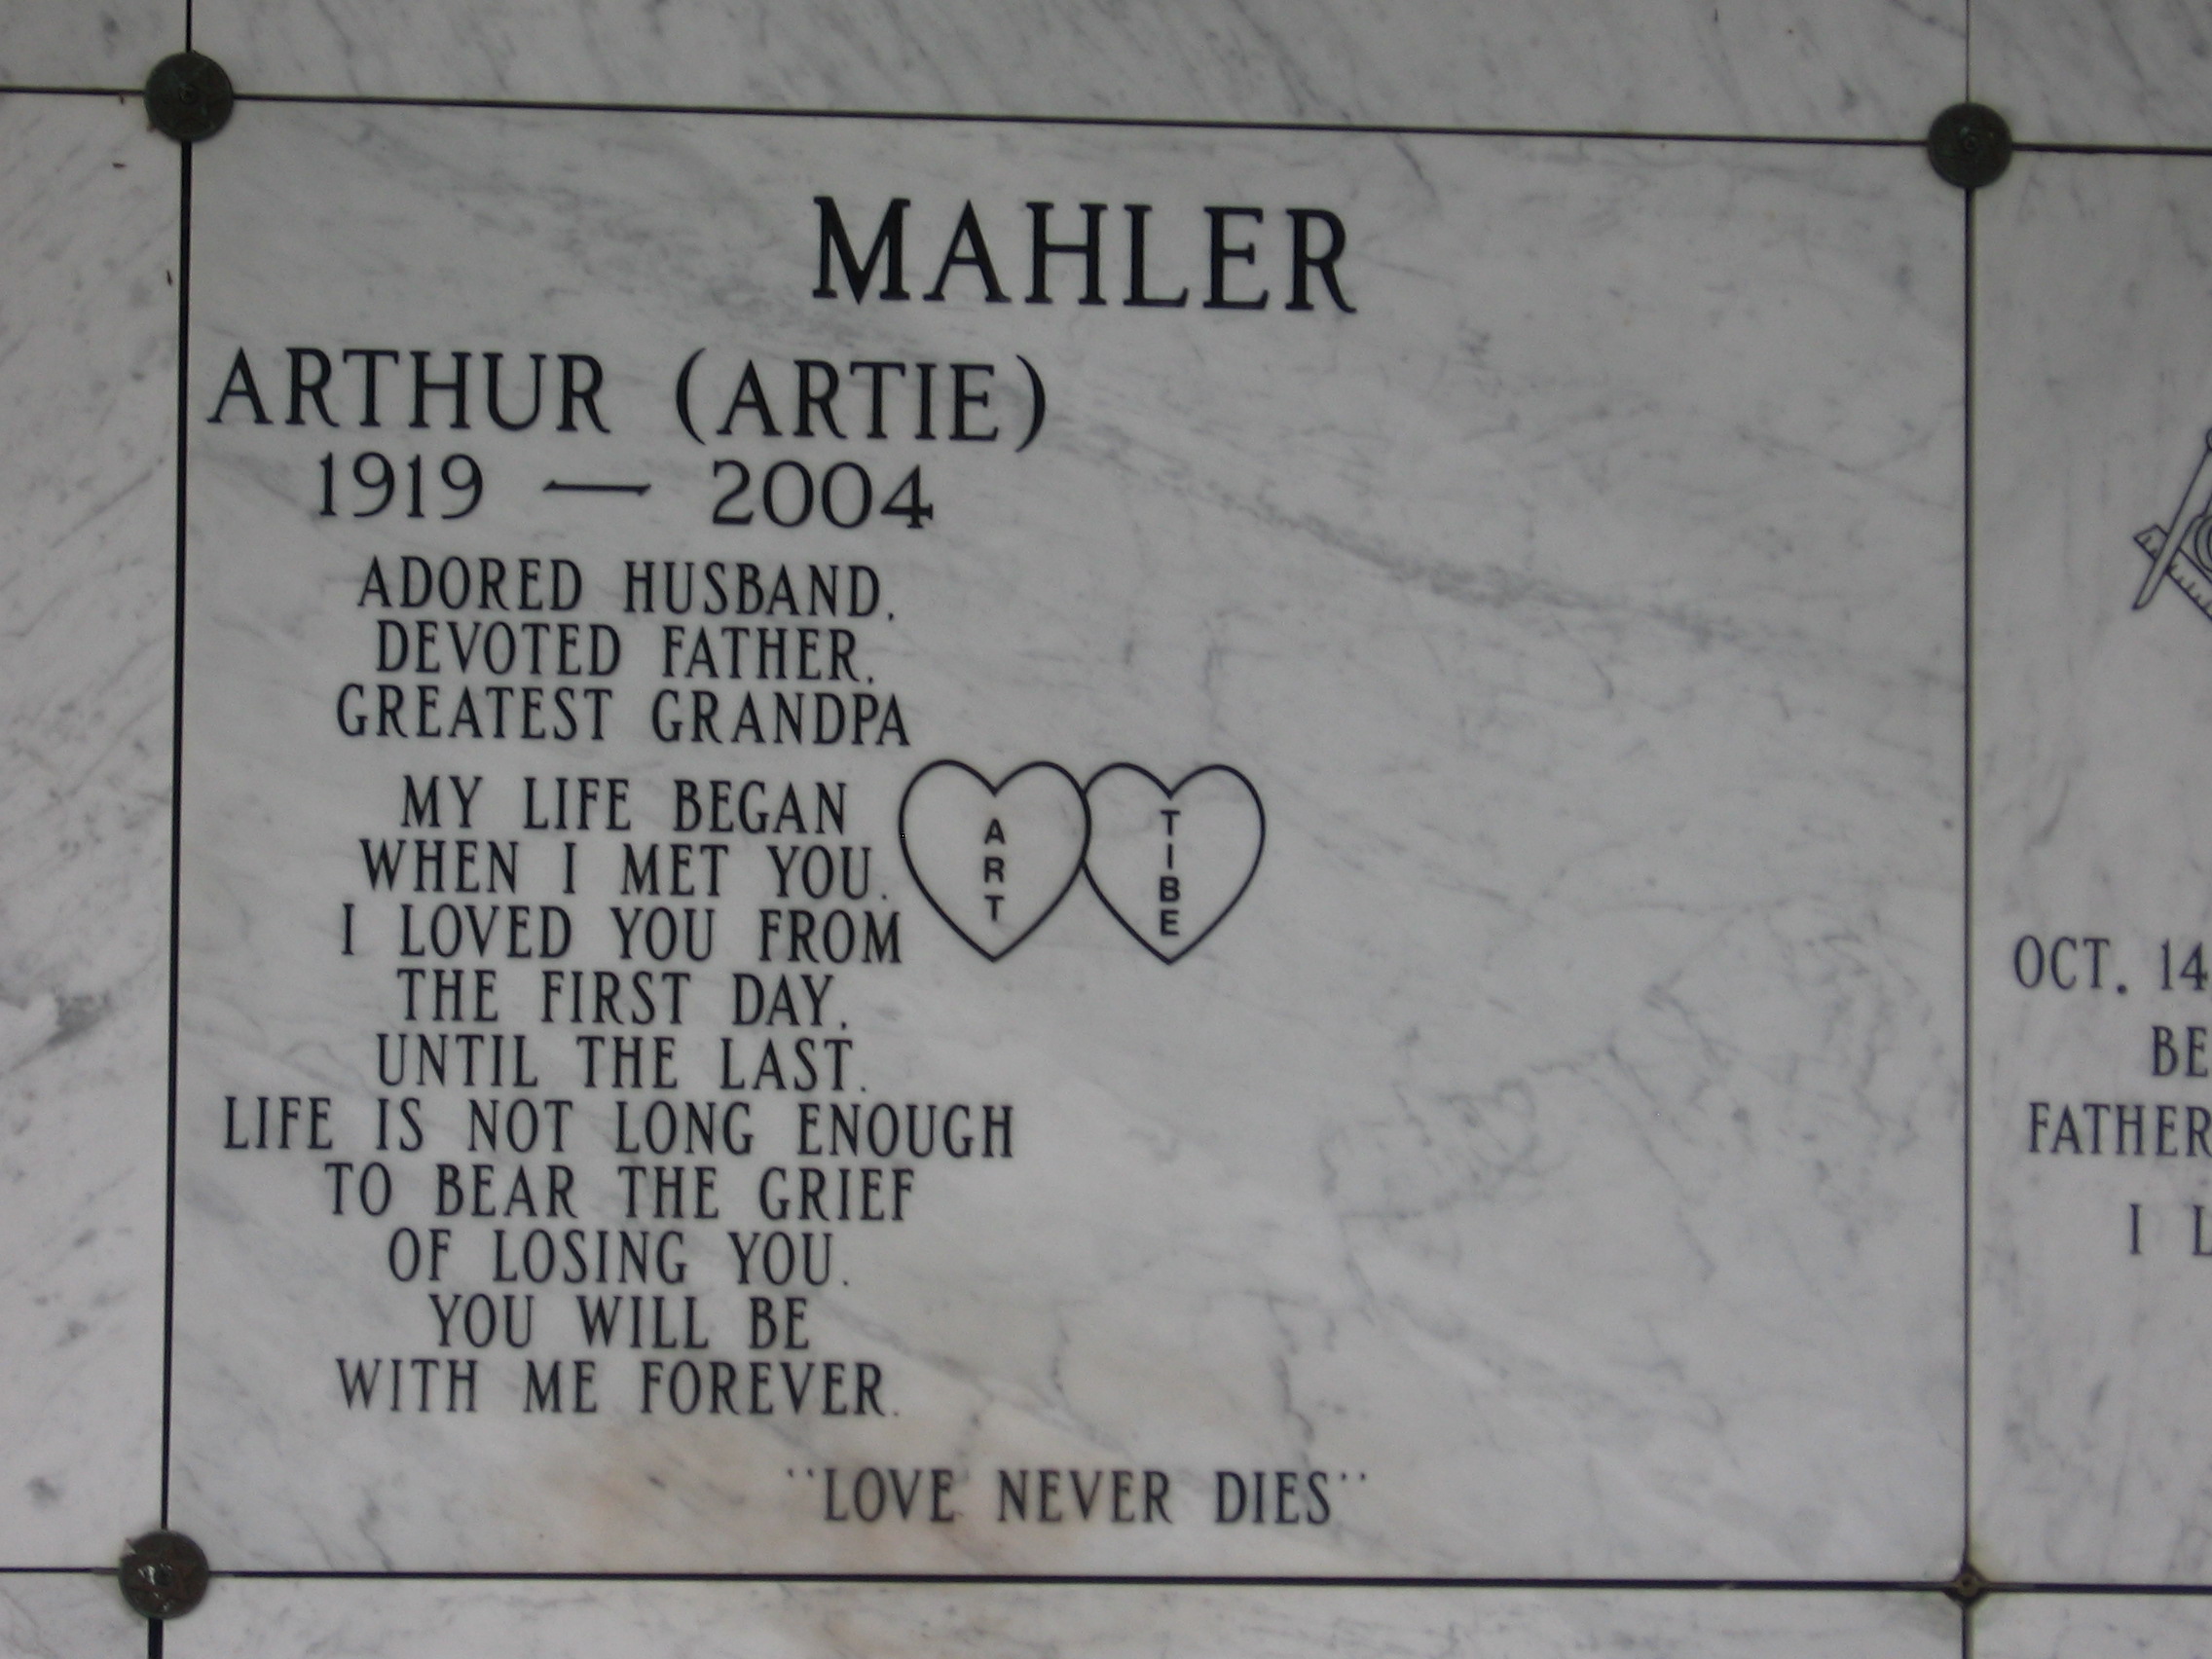 Arthur "Artie" Mahler